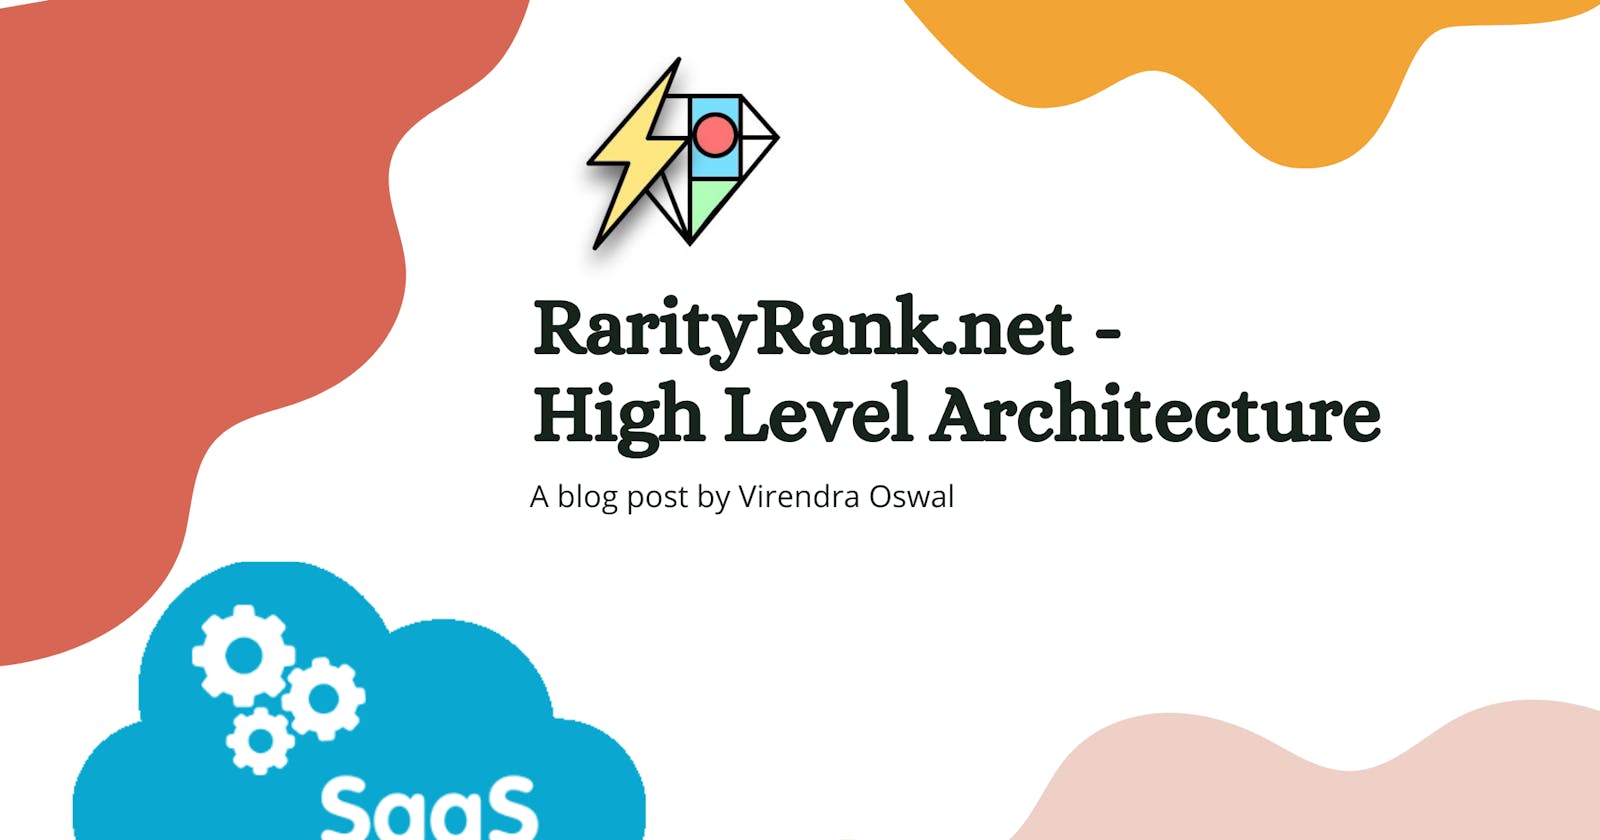 RarityRank.net - High-Level Architecture